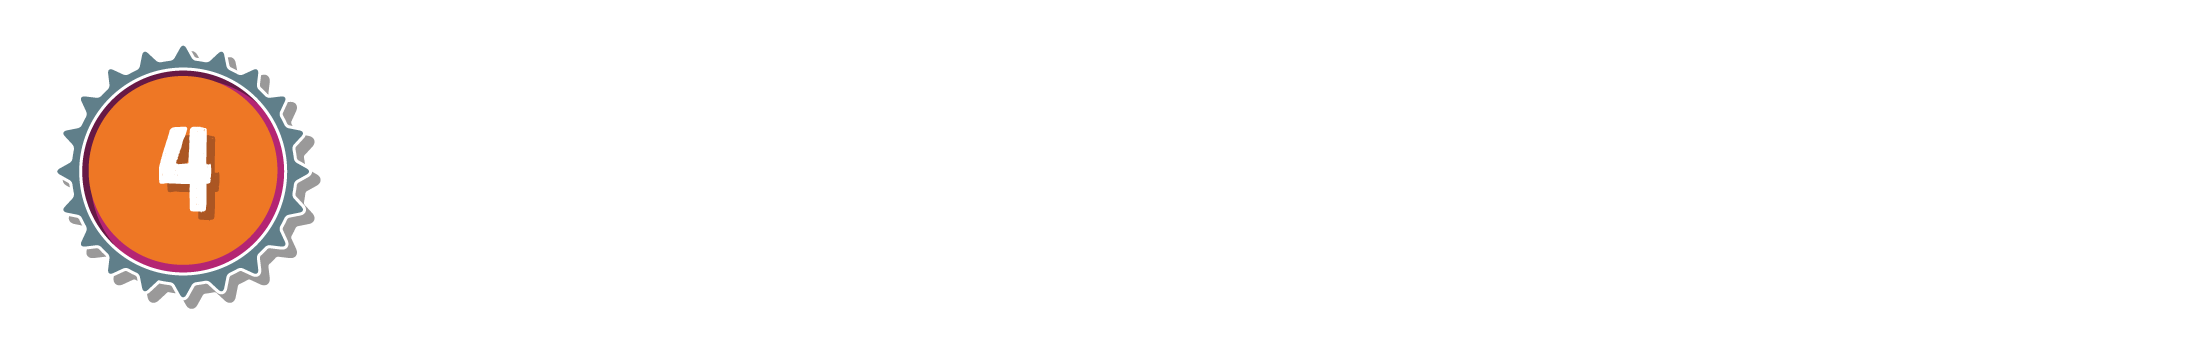 brewer listing-04